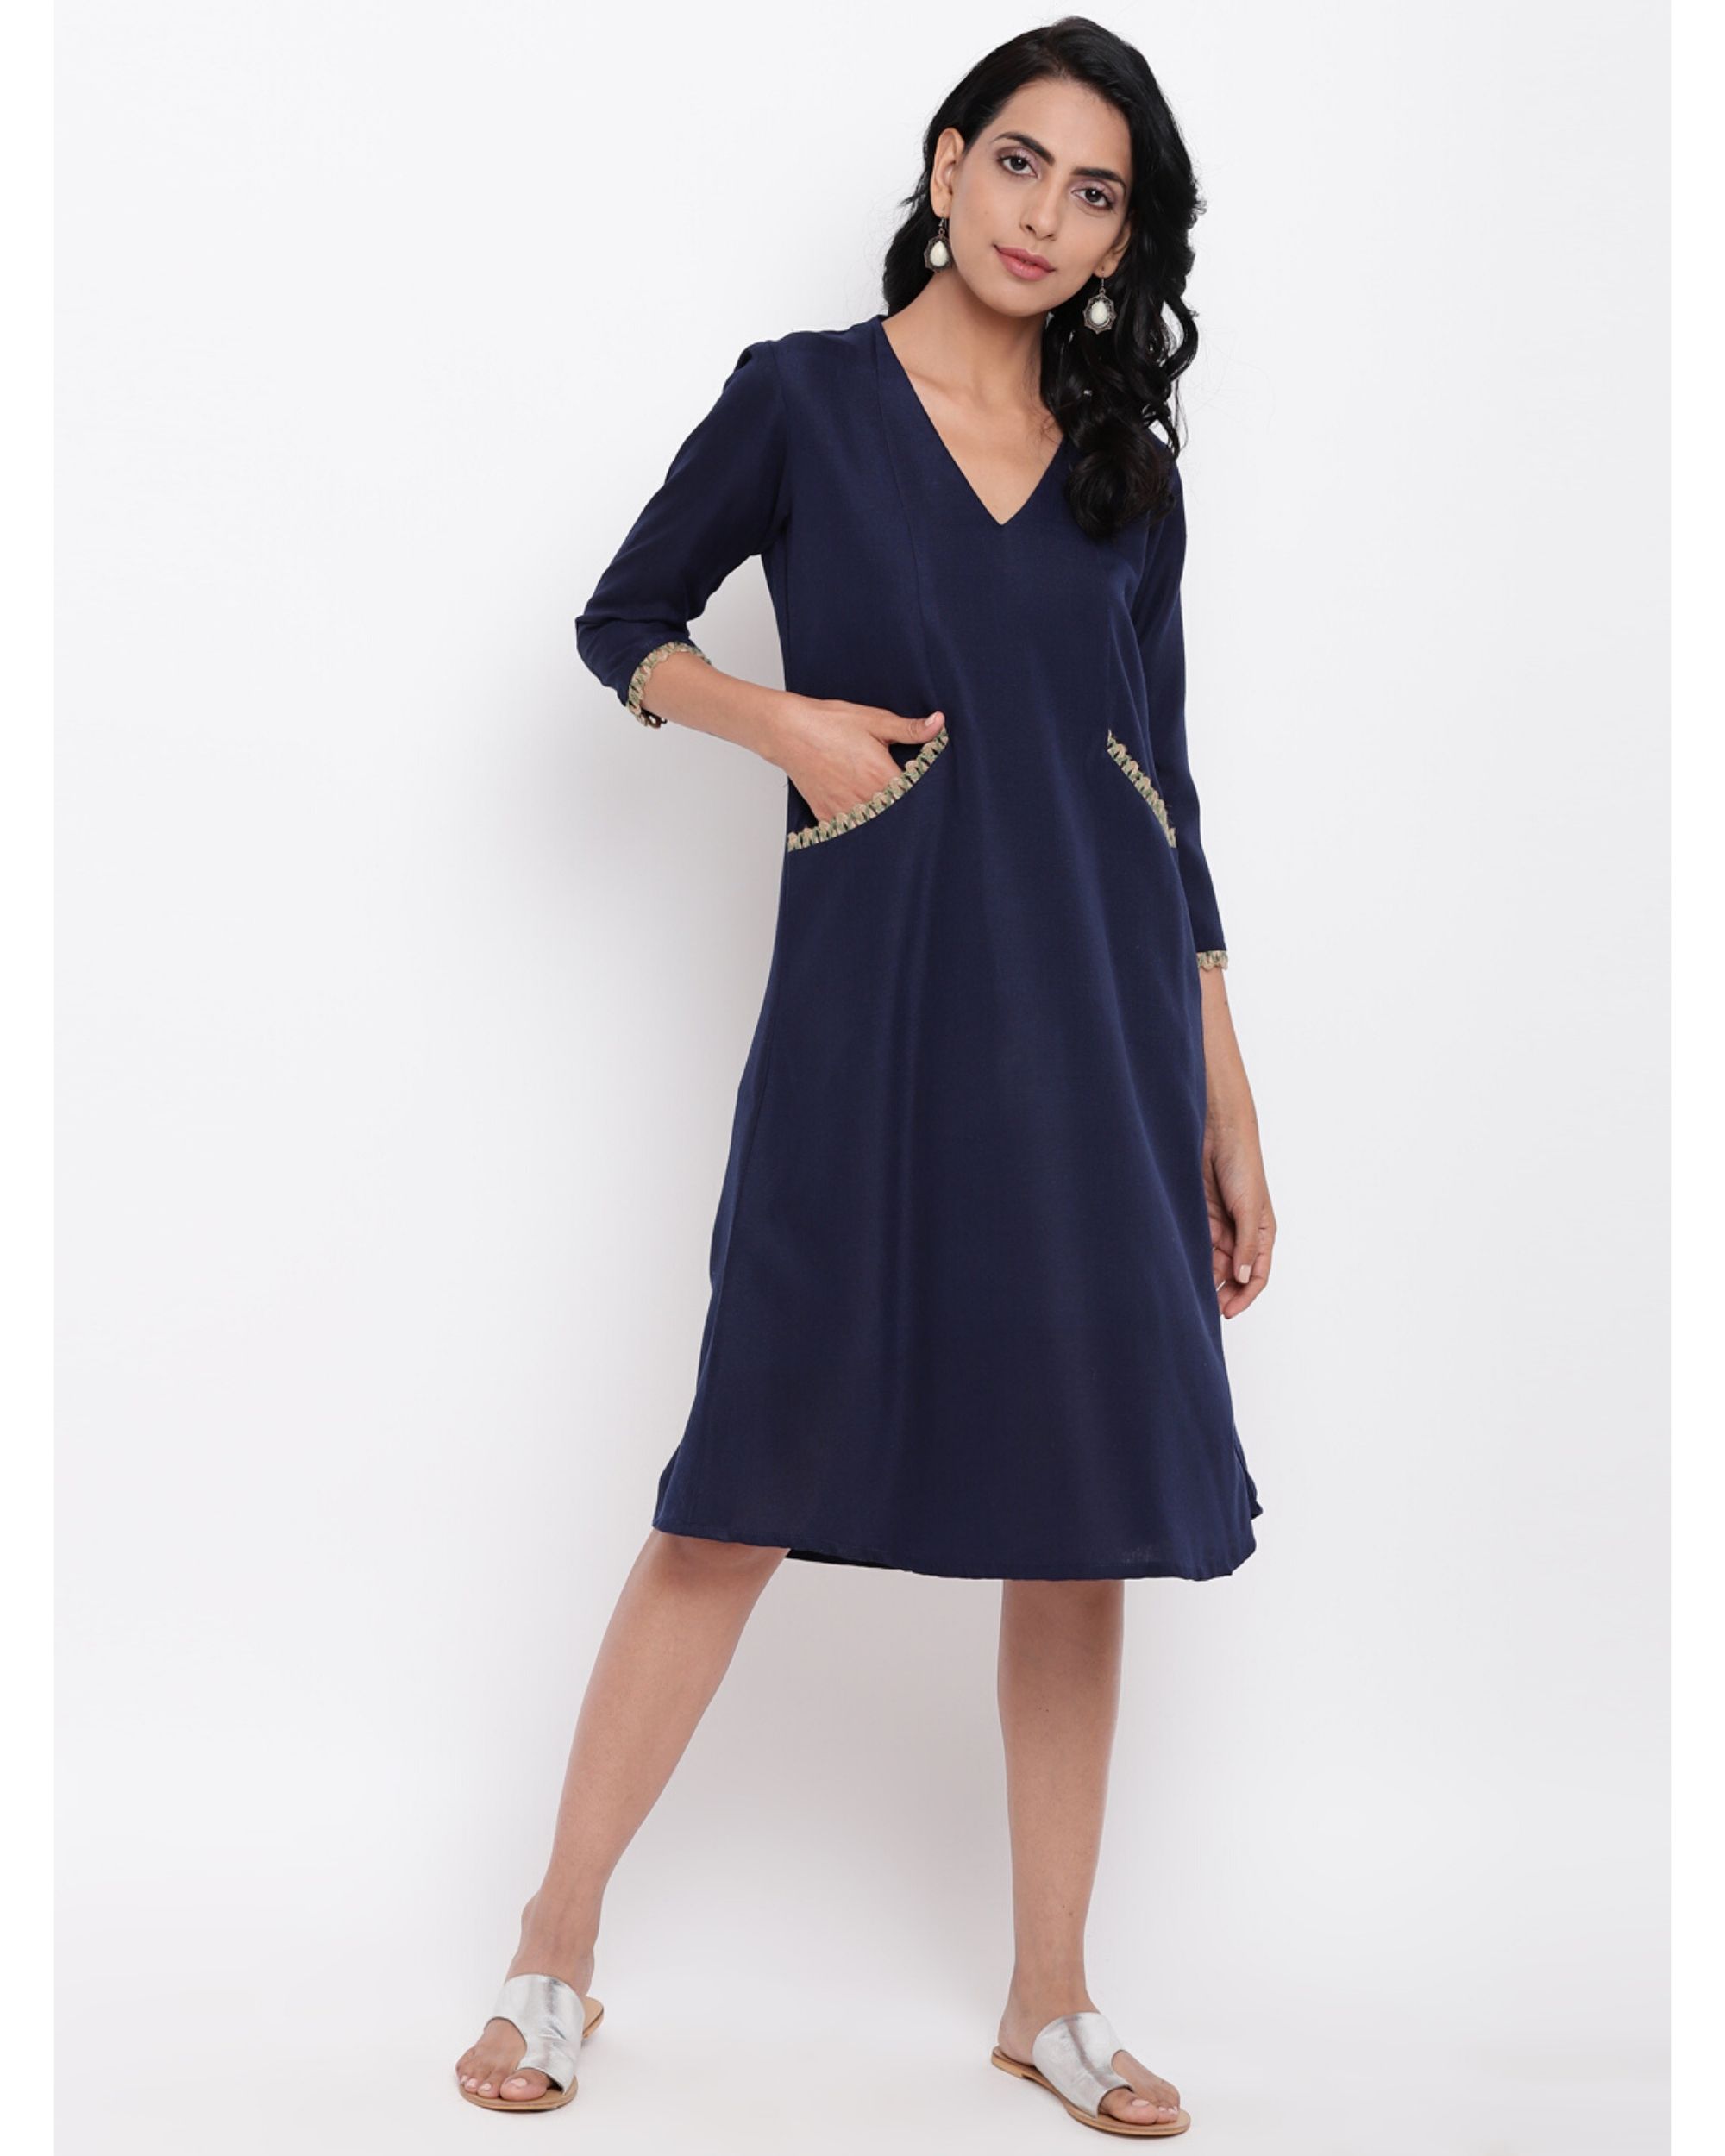 Navy blue jute lace pocket dress by trueBrowns | The Secret Label